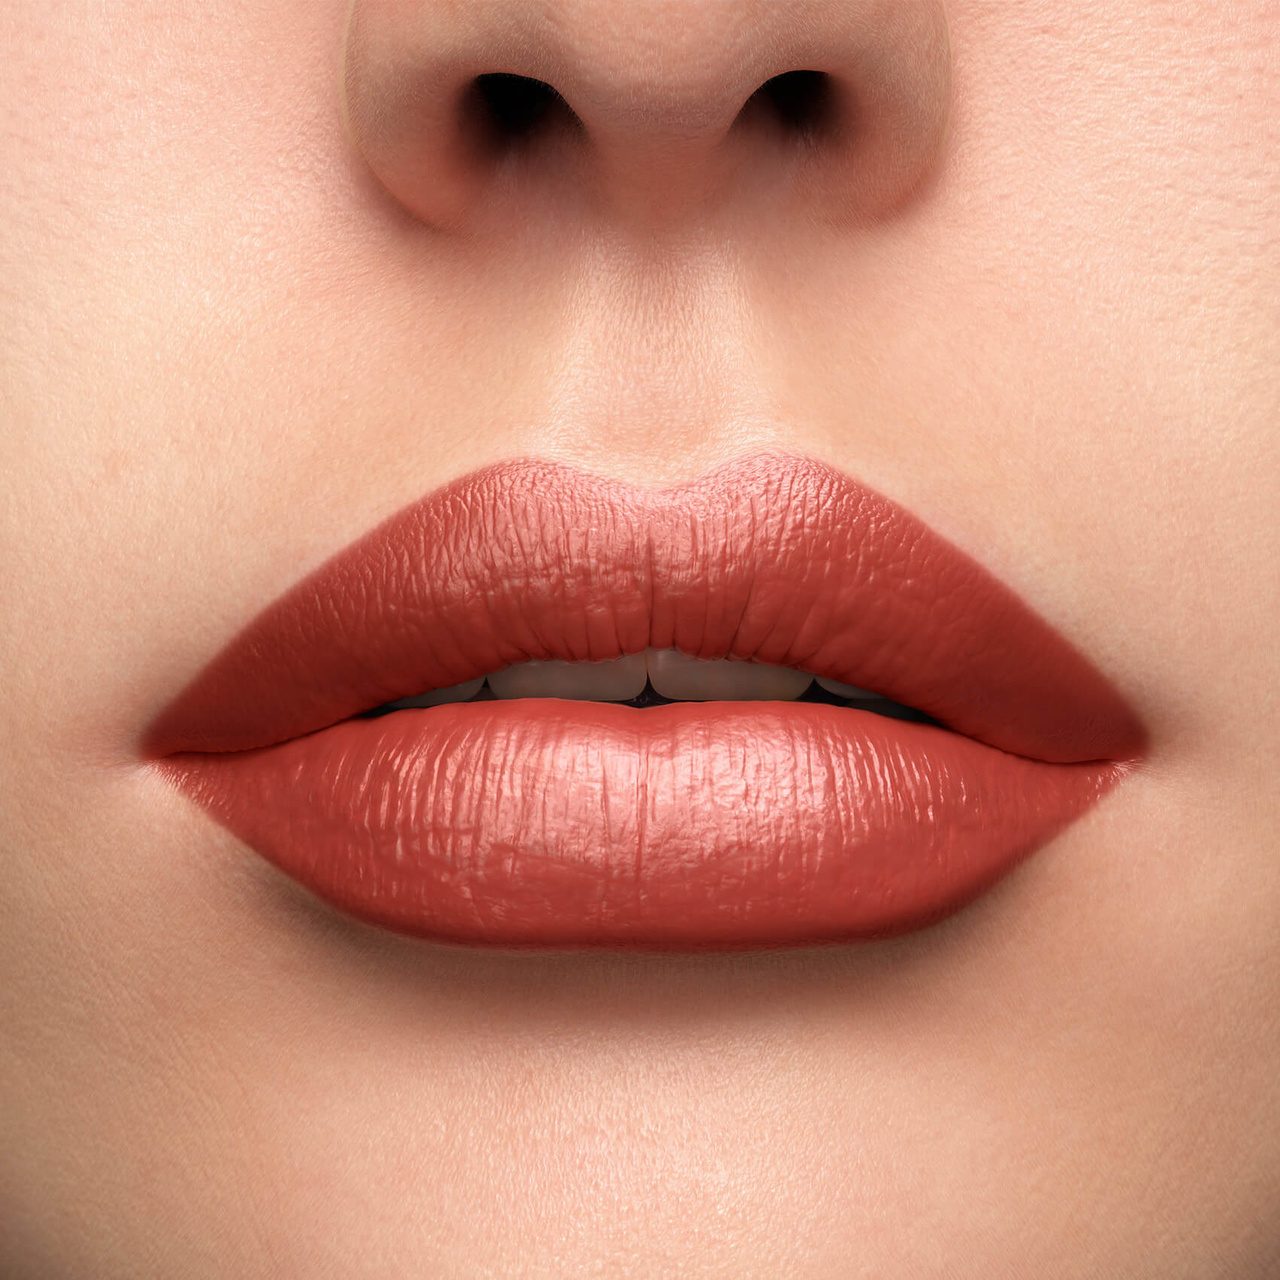 Lancome L Absolu Rouge Cream Lipstick 295